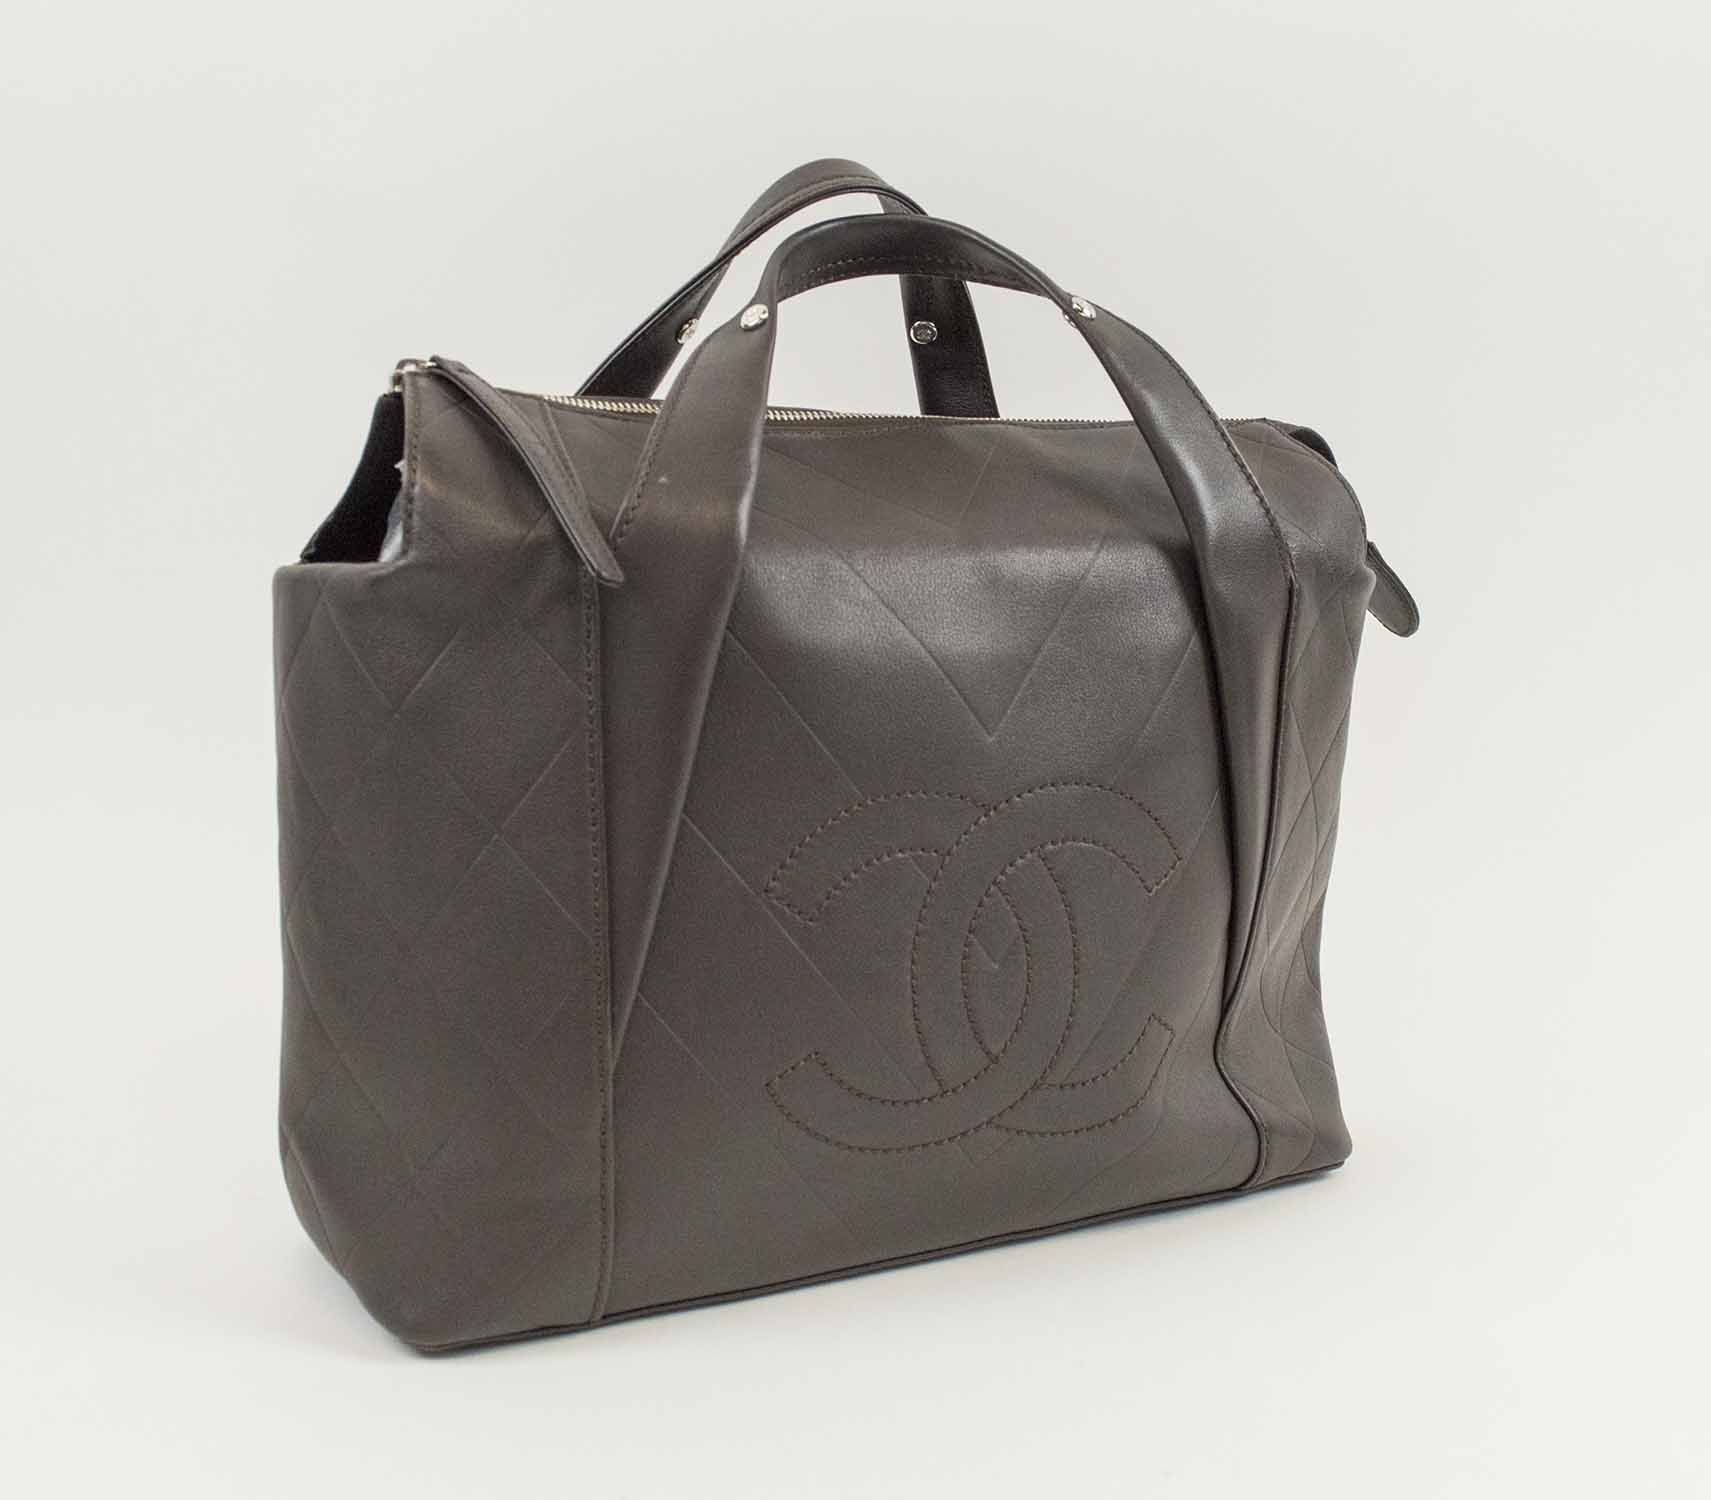 Chanel Paris 2015 Brown Ombré Quilted Leather Mink Fur Tote Bag